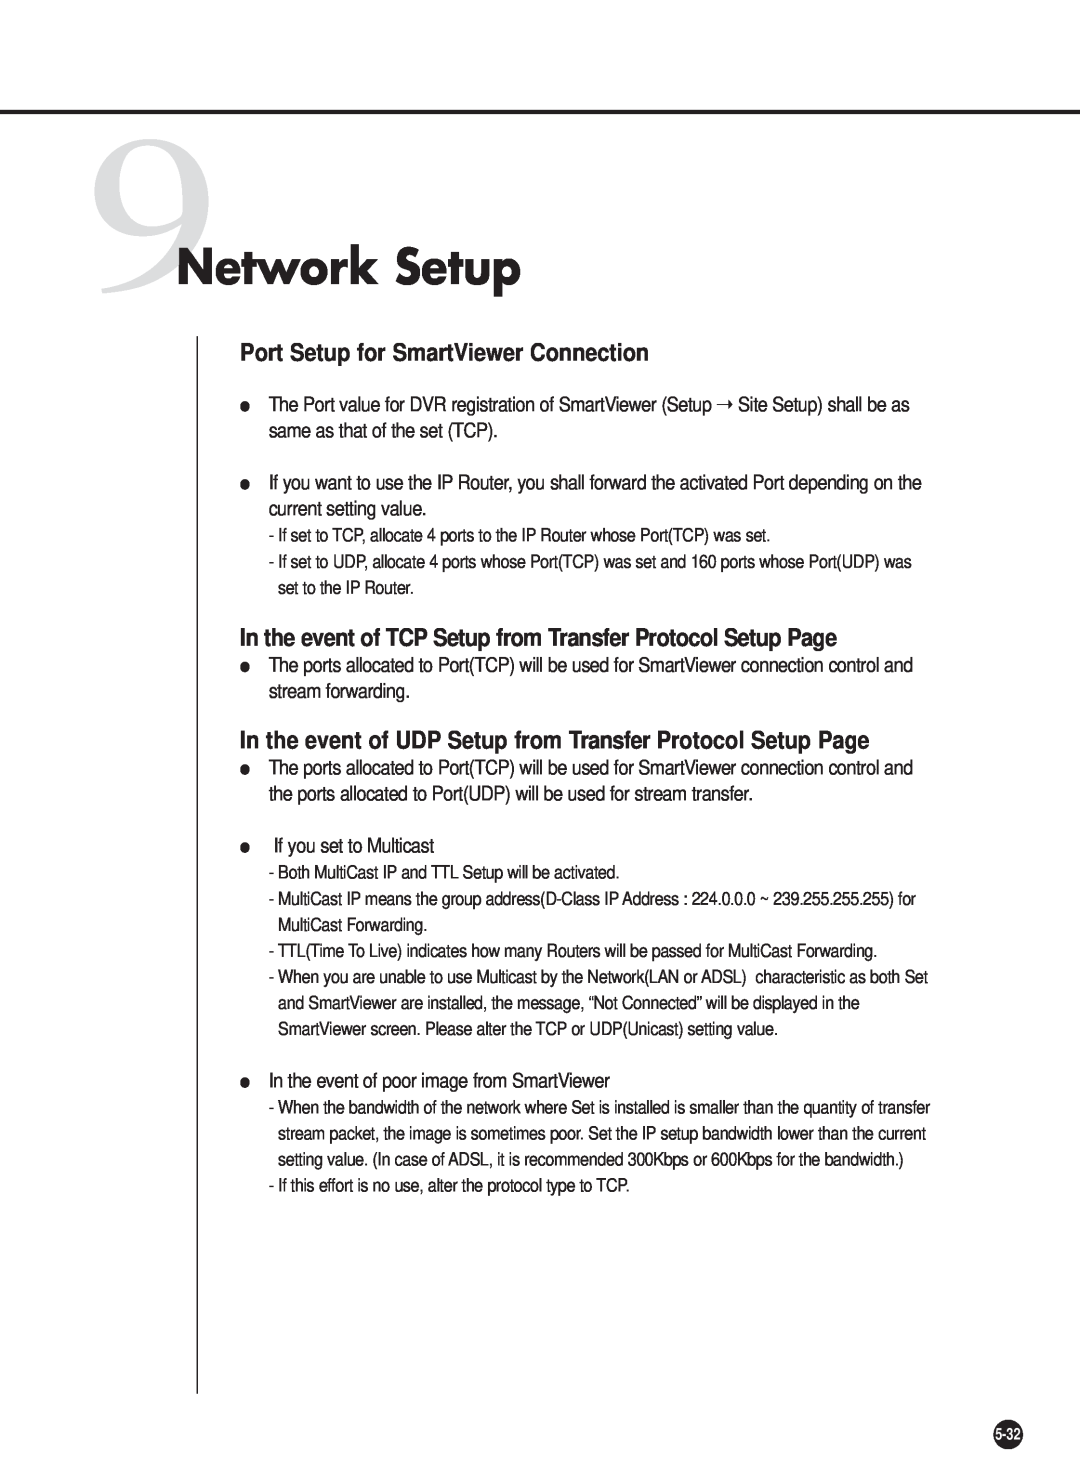 Samsung SHR-2040P/XEC, SHR-2040P/GAR, SHR-2042P, SHR-2040PX manual 9Network Setup, Port Setup for SmartViewer Connection 